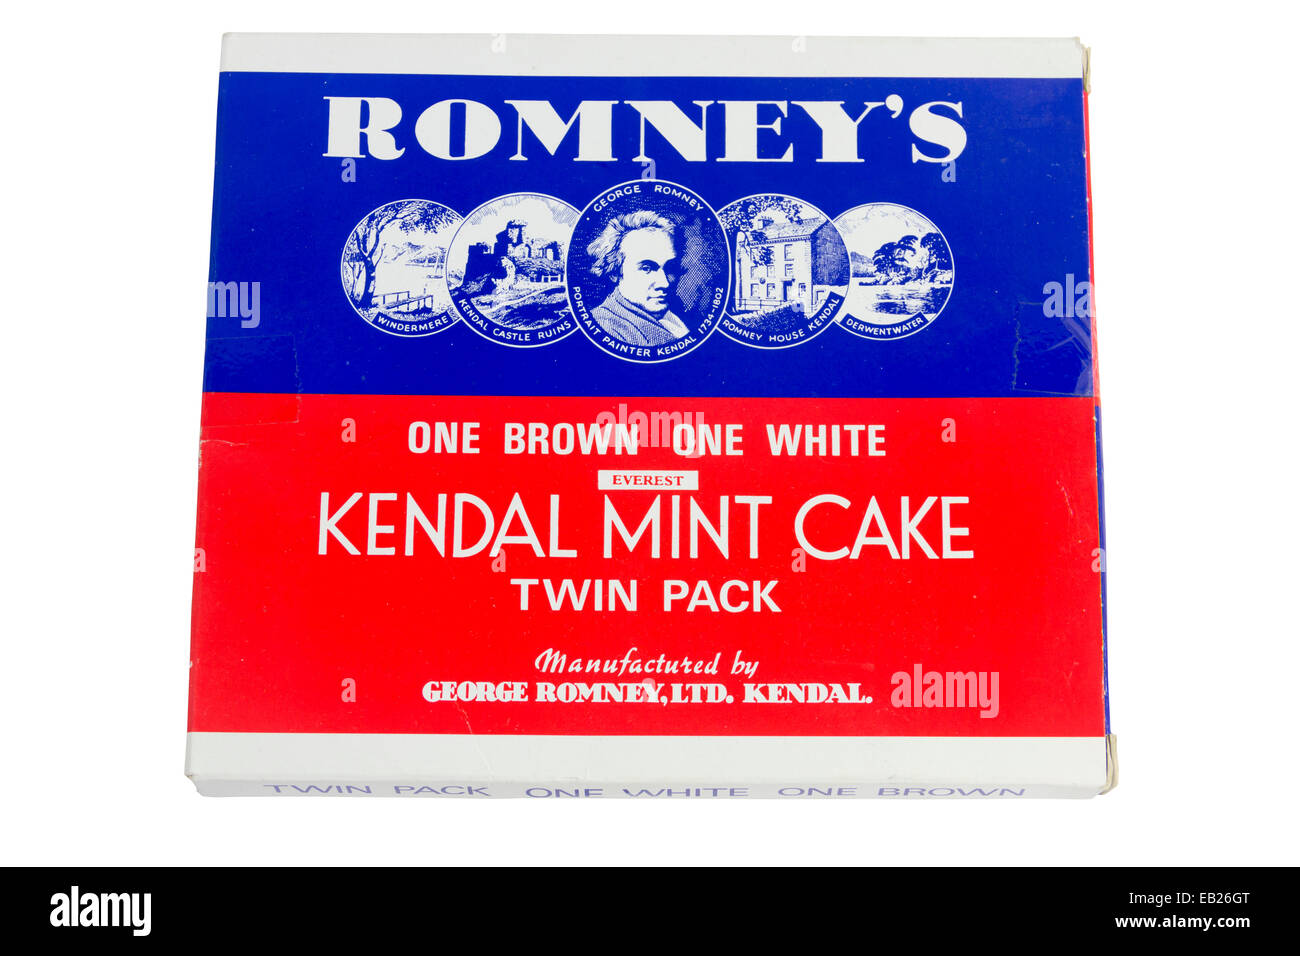 Doppelpack von Romney Kendal Mint Cake. Stockfoto